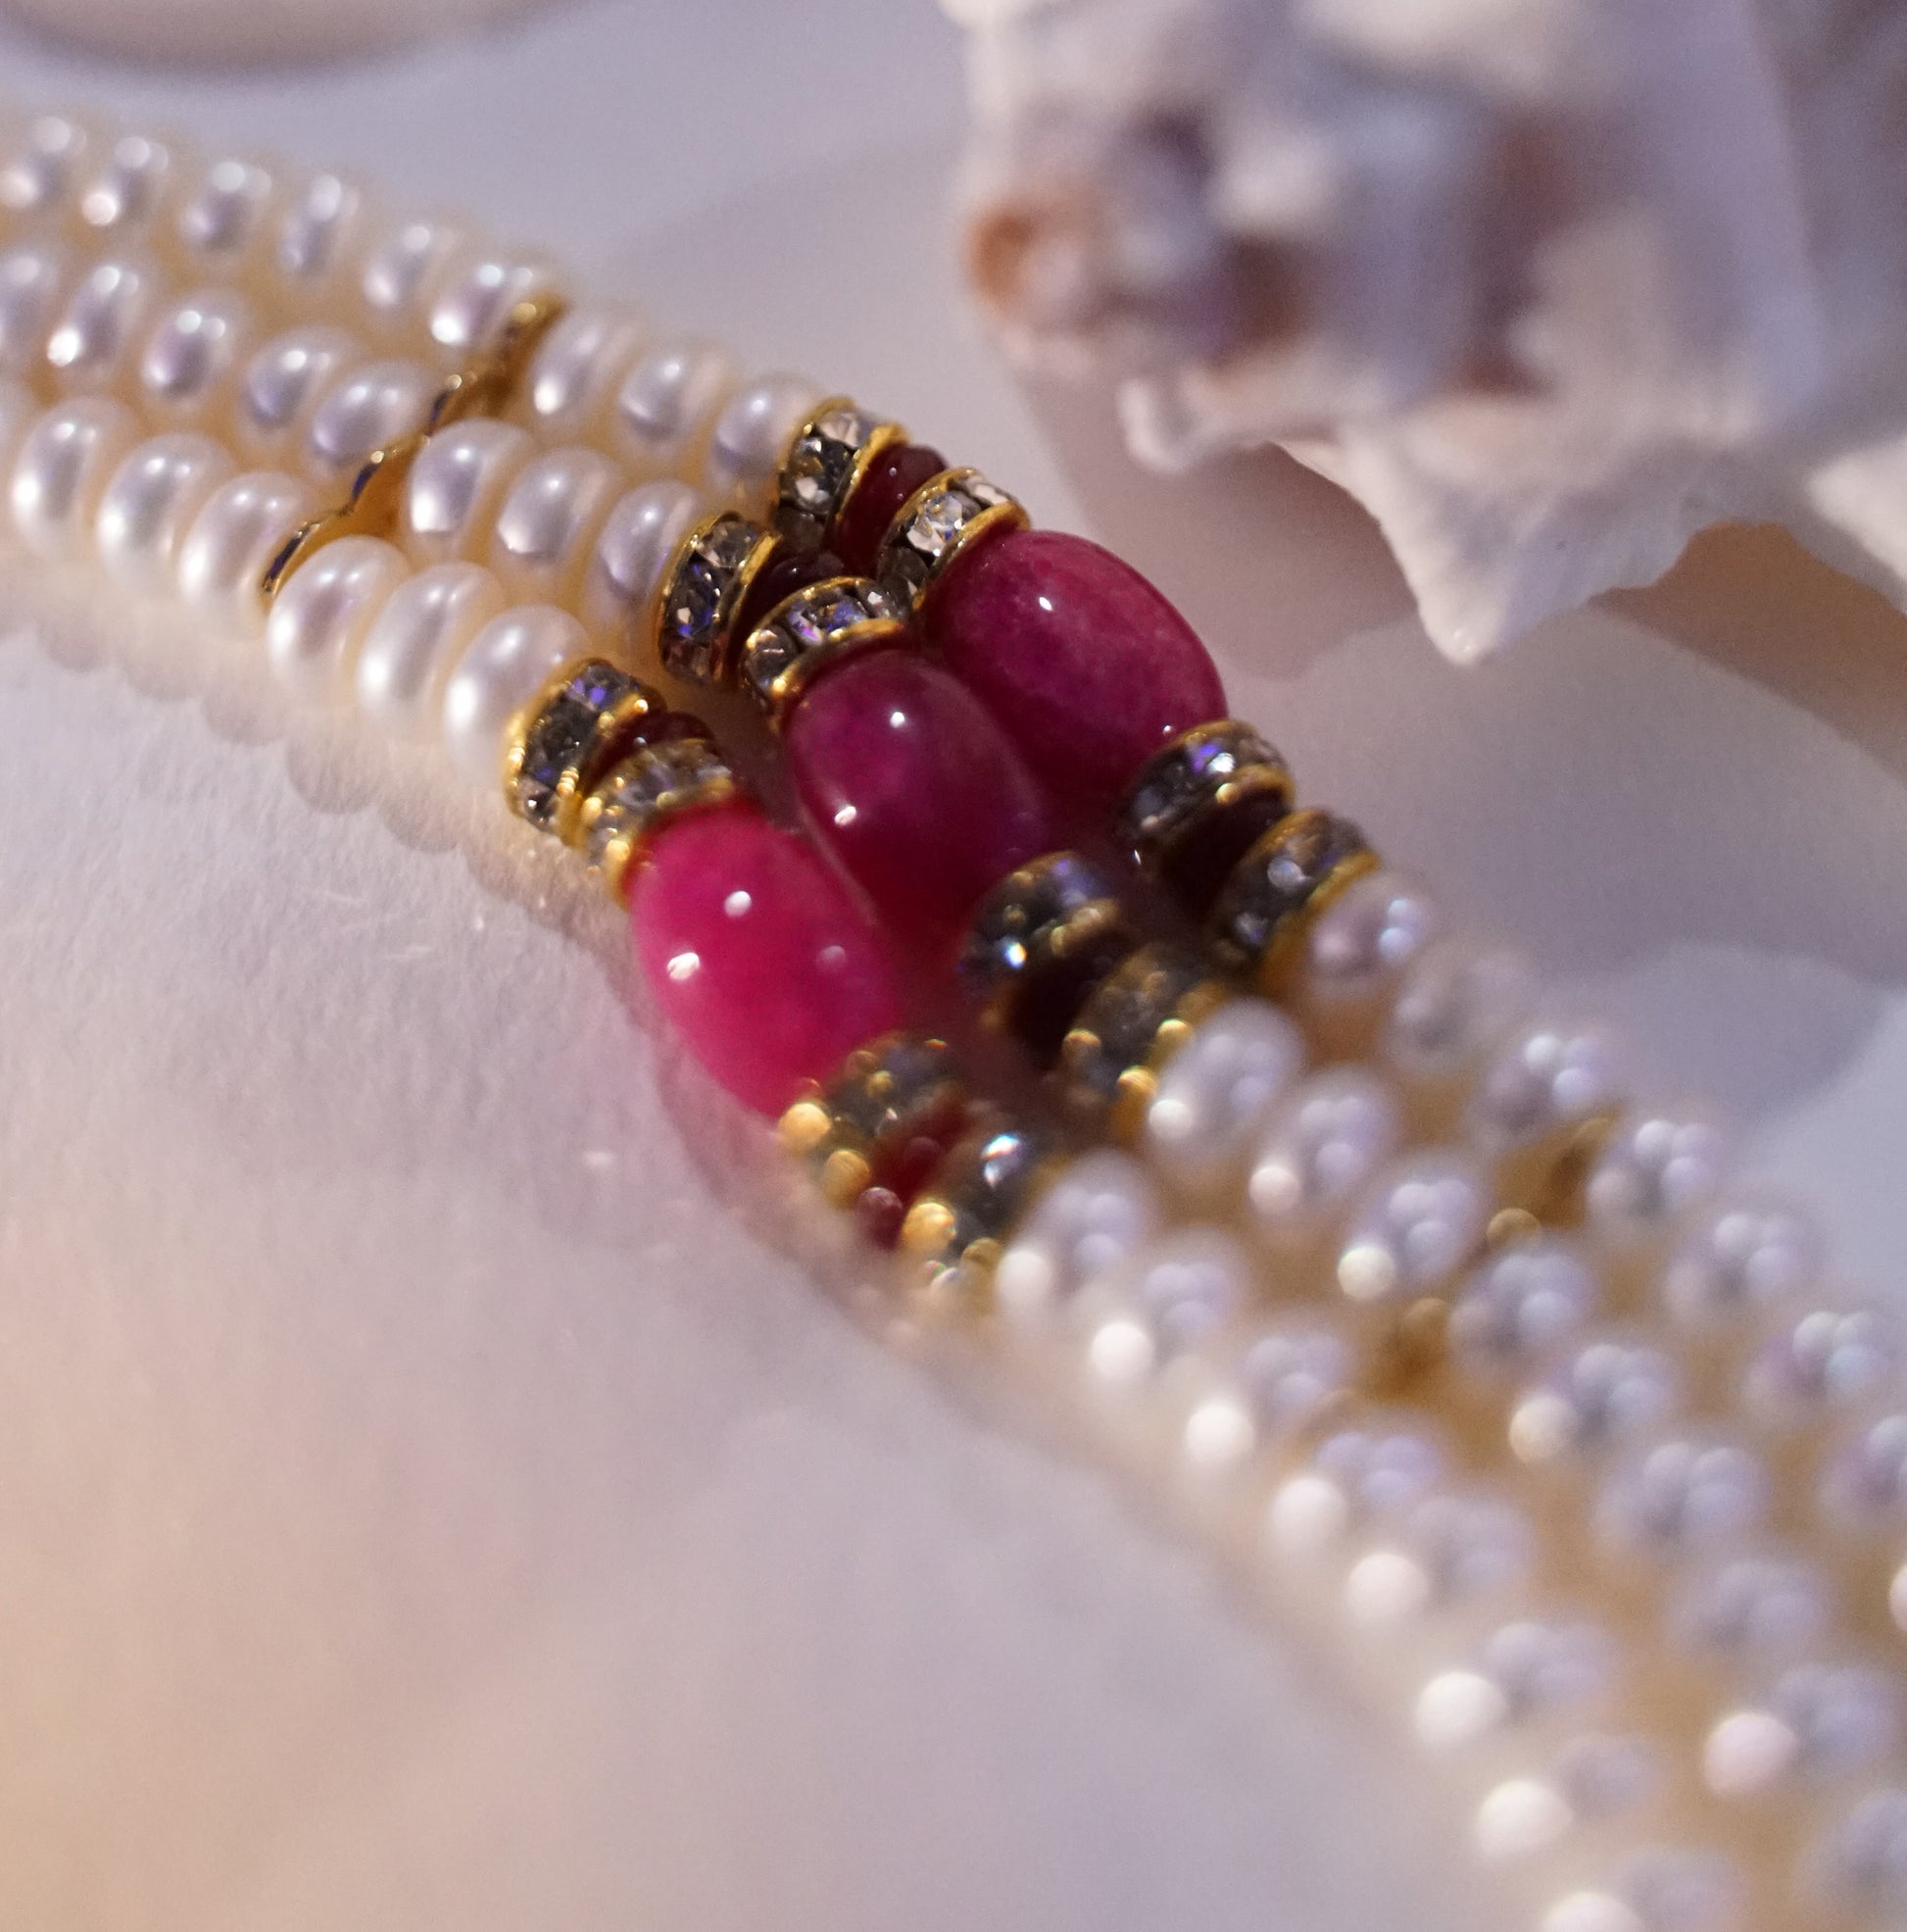 3 layer pearl bracelet